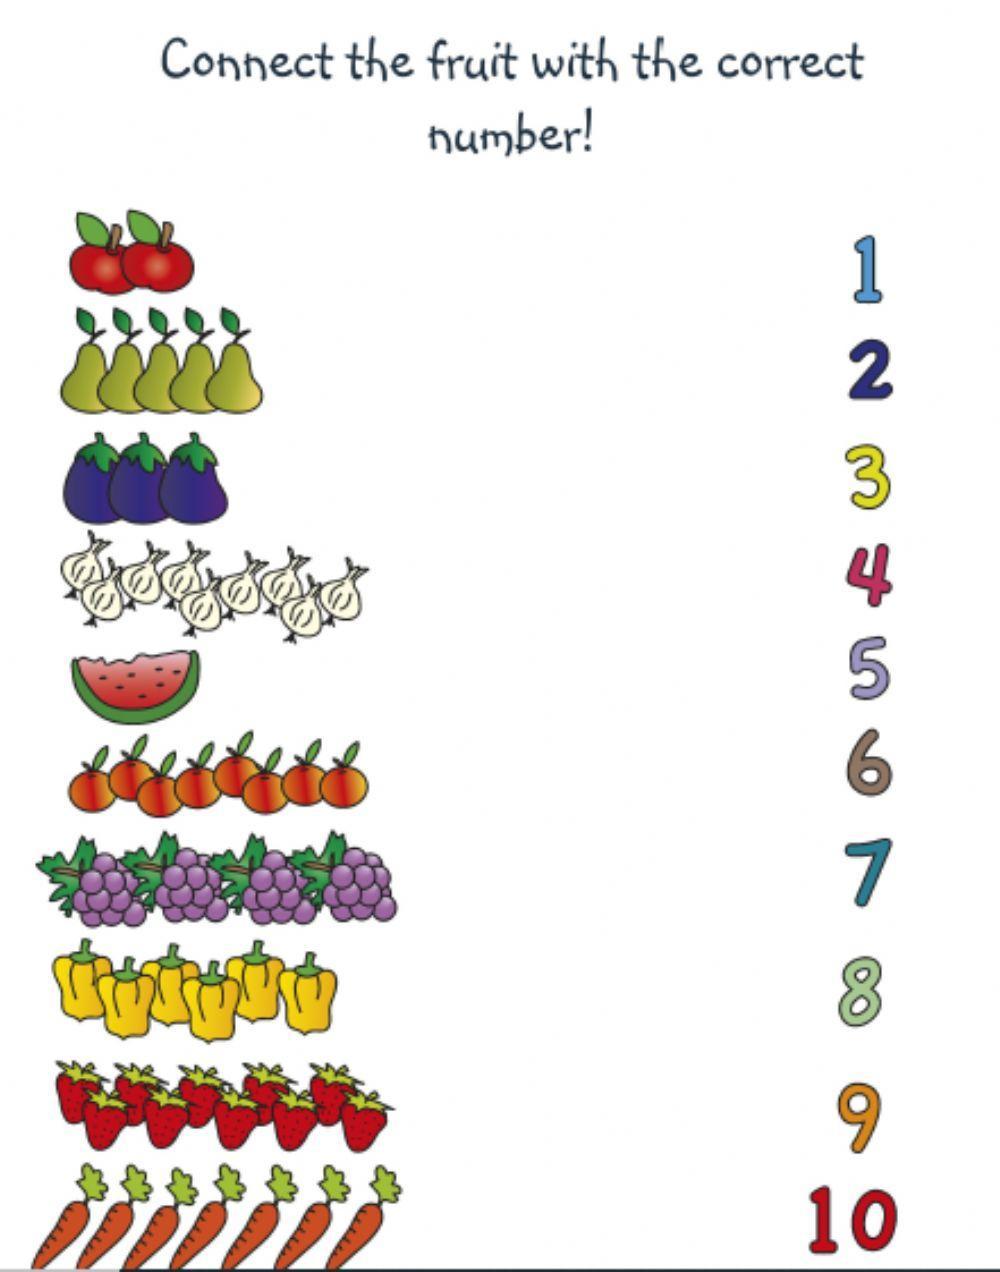 Veg-Fruit Number Match